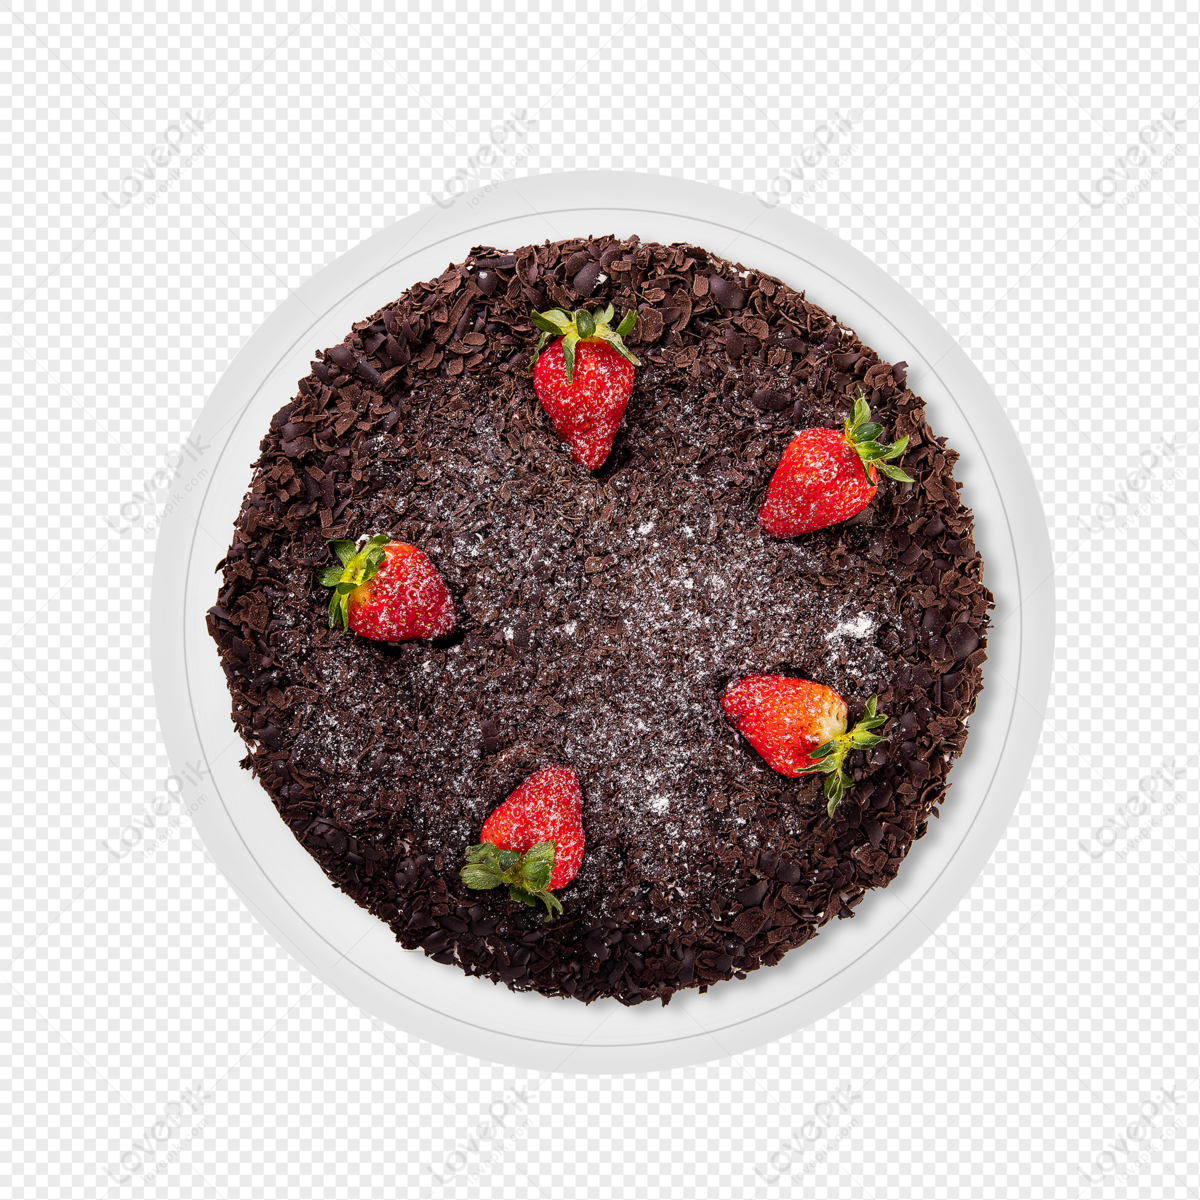 Download HD Black Forest Cake - Special Cake Transparent PNG Image -  NicePNG.com